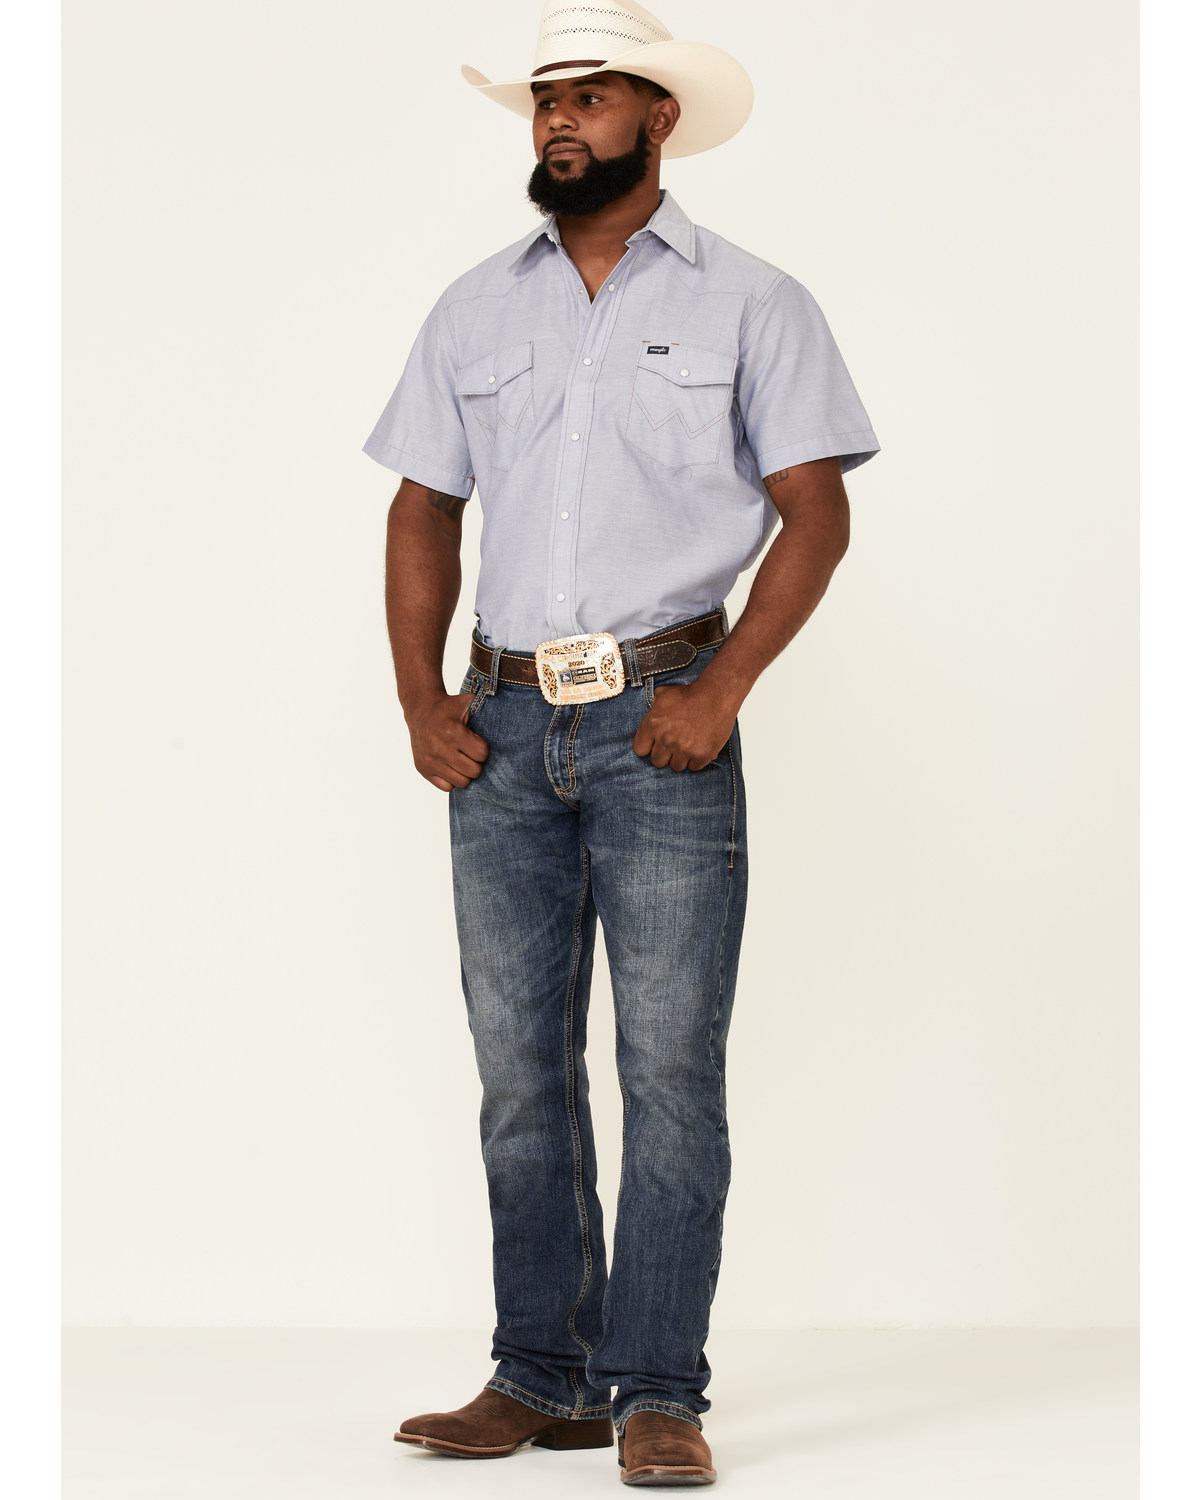 Wrangler Chambray Short Sleeve Work - Mens Shirt  - 1070131Mw - image 2 of 4